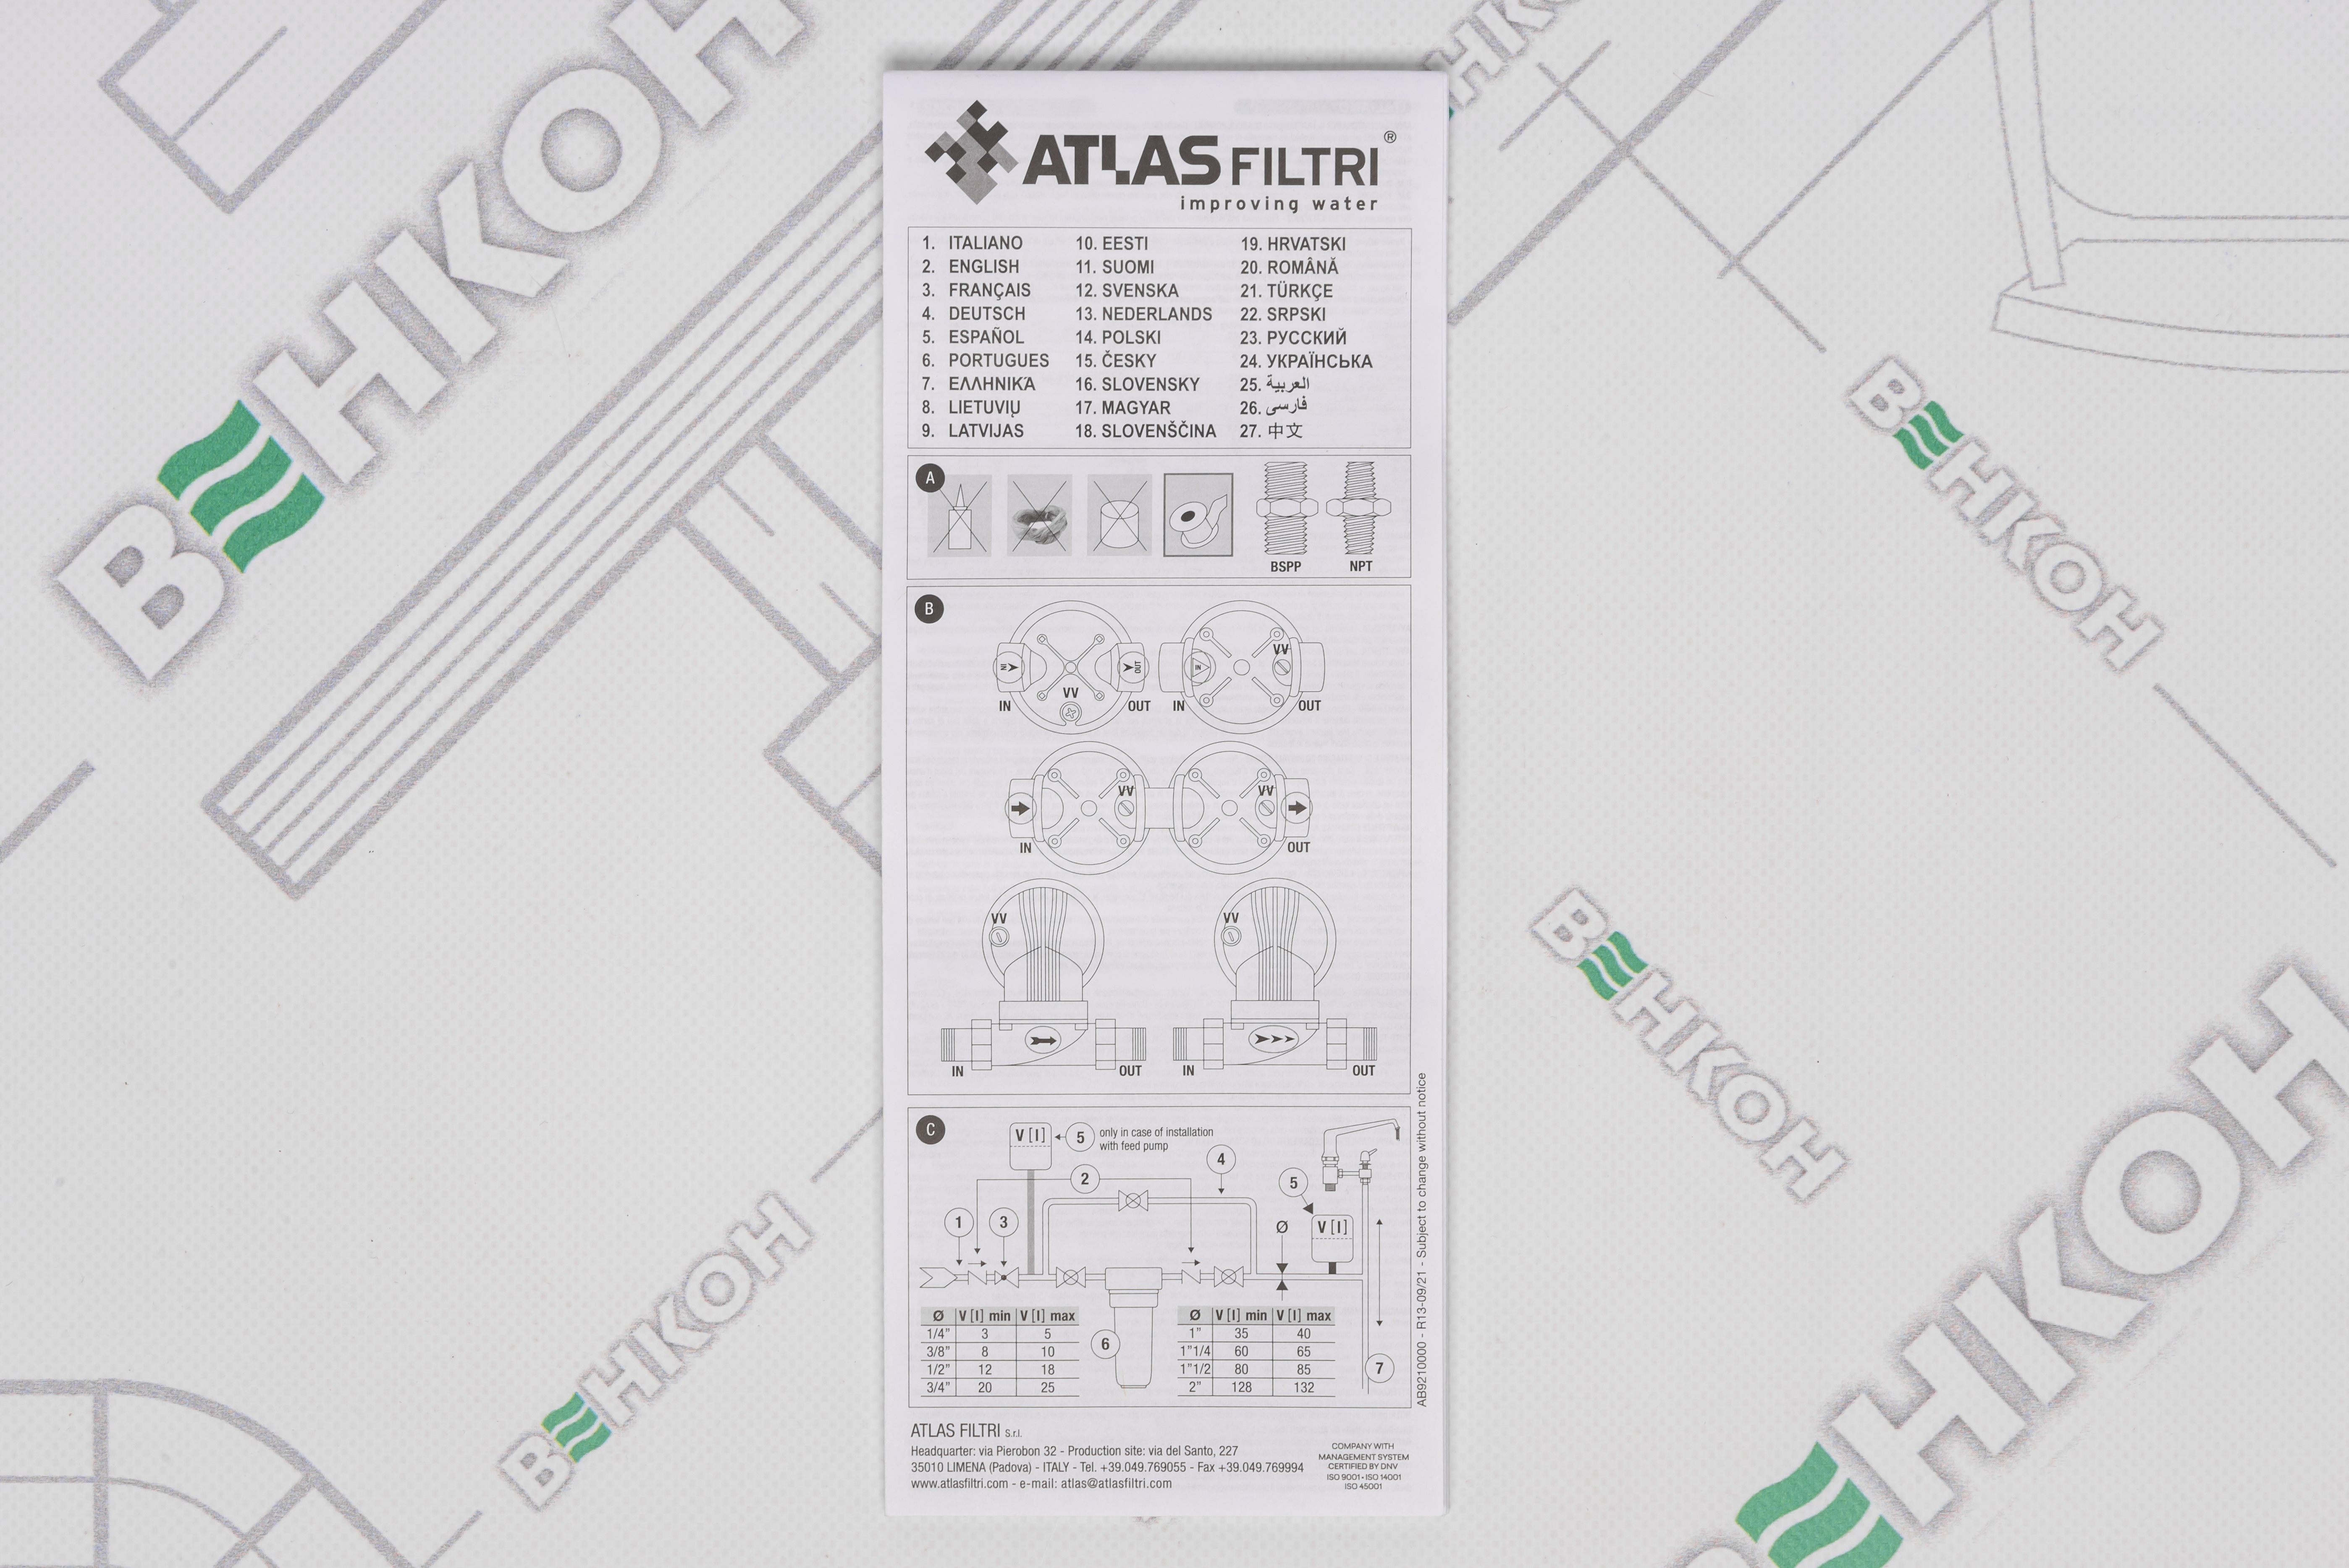 Фильтр Atlas Filtri Triplex Plus 3P 10 AFO SX TS 3/4 (RA112T431) обзор - фото 8